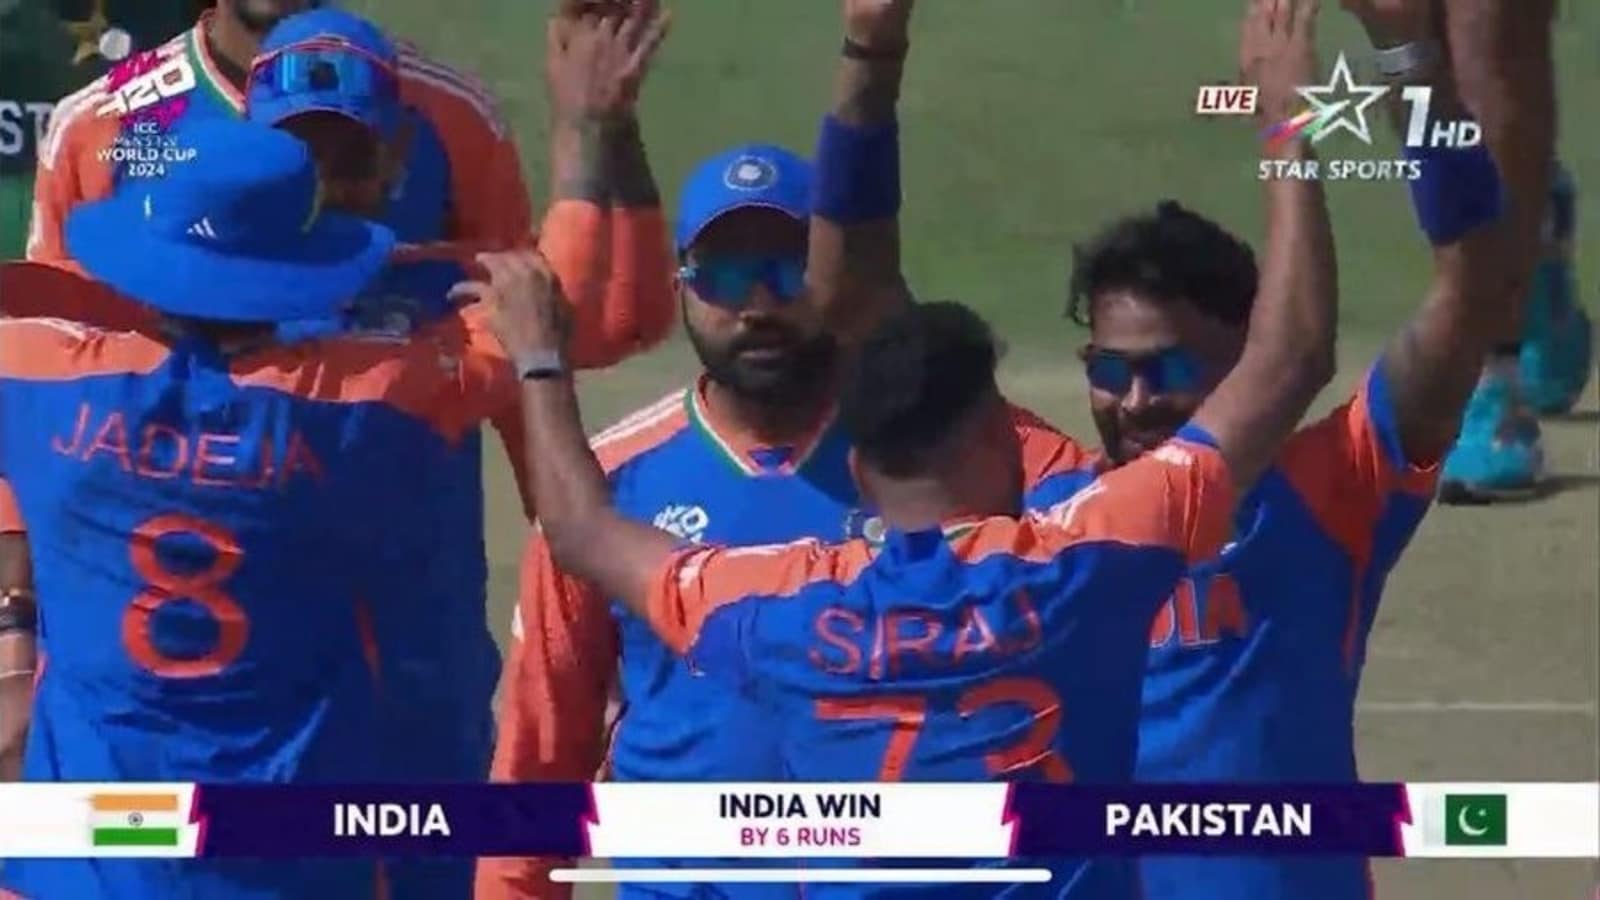 India dominates Pakistan in cricket yet again, X explodes in joy